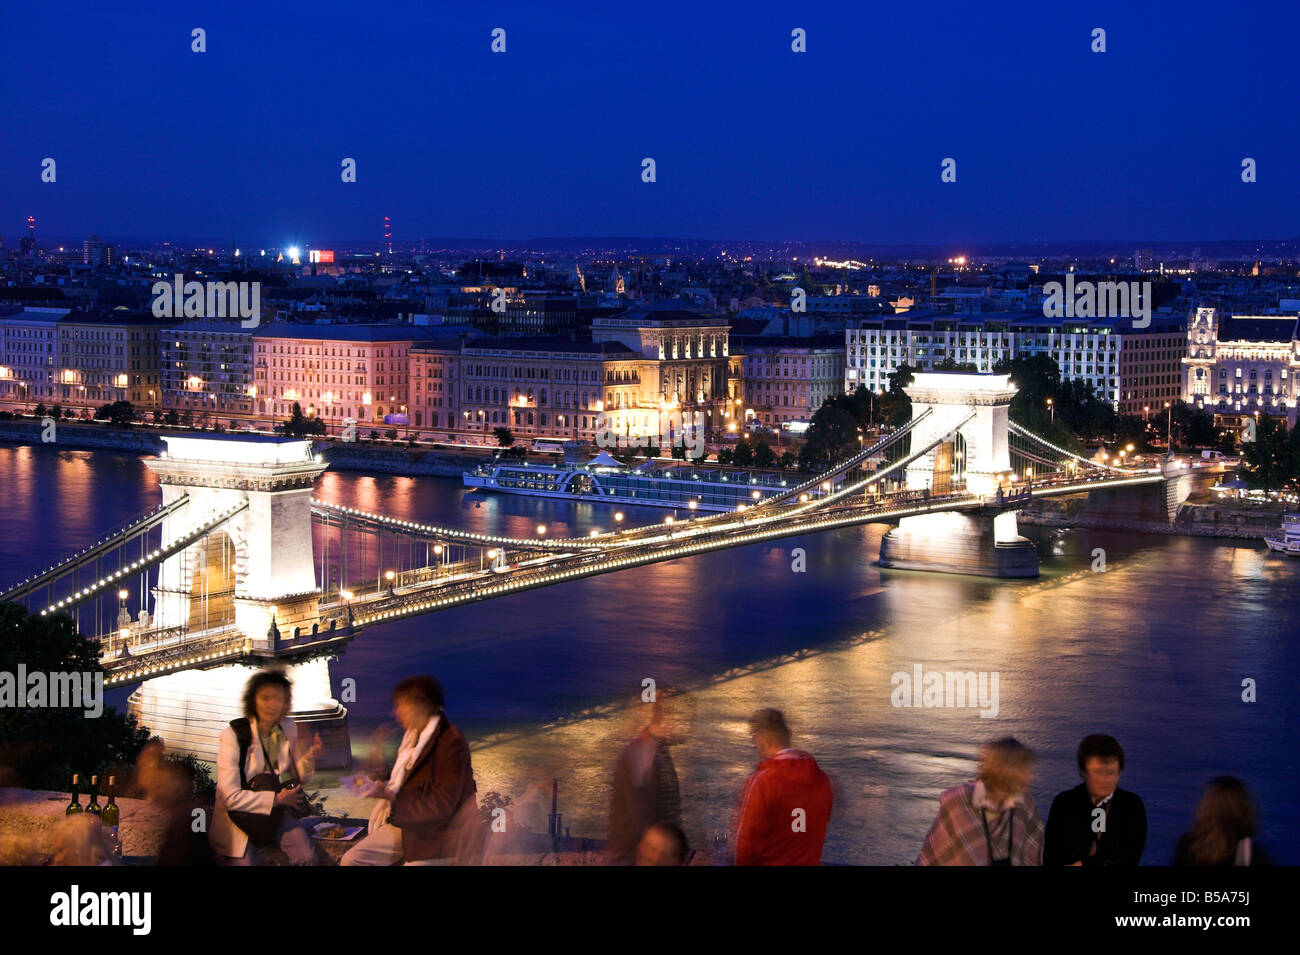 Chain Bridge lit up at night, Budapest, Hungary Stock Photo